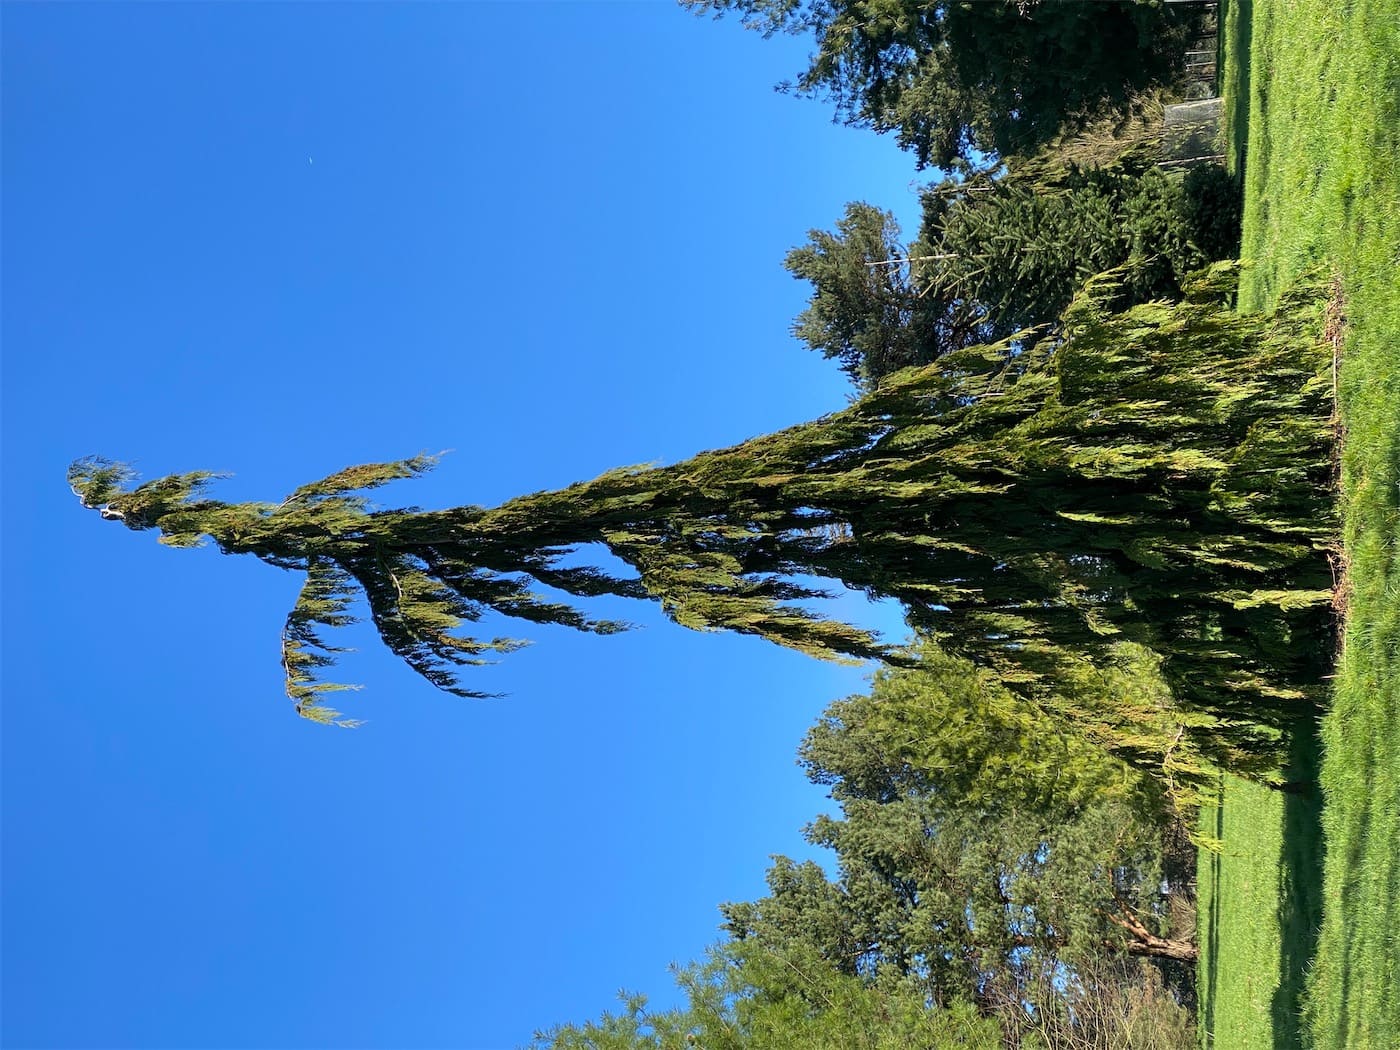 A vaguely Dr. Seuss-esque looking tree